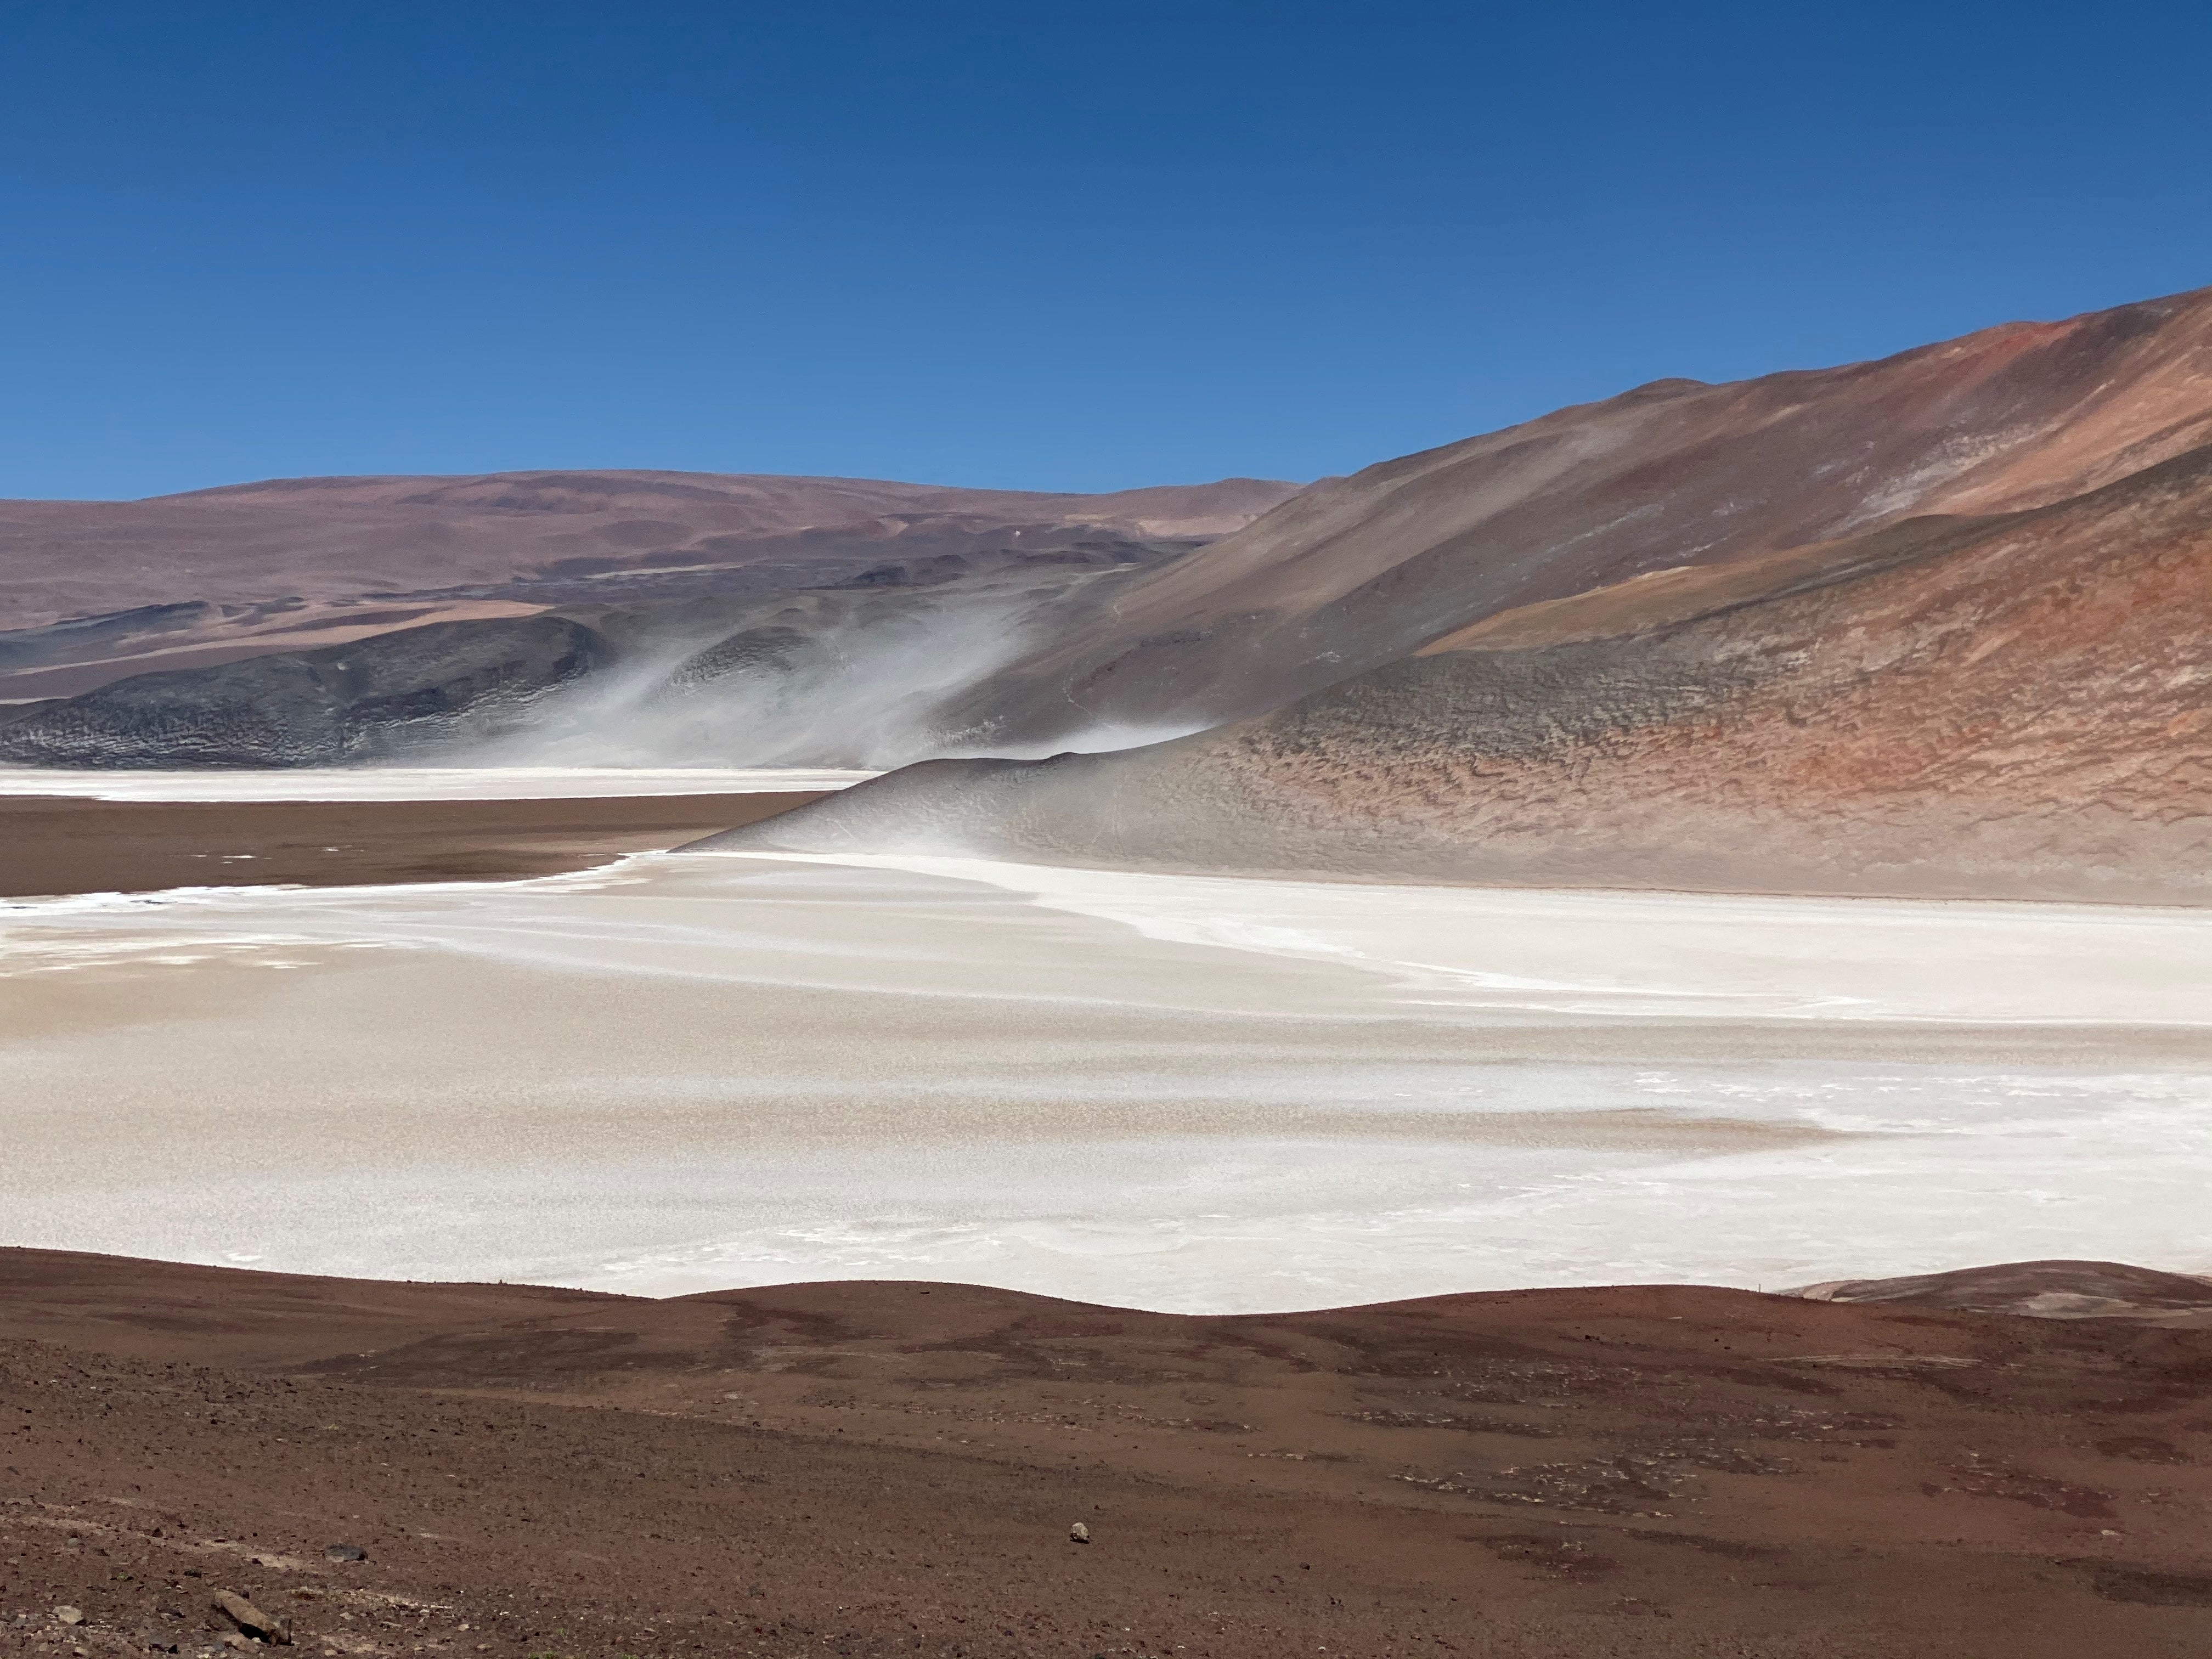 A view of Aguilar Salt Flat in the Atacama Desert, Chile